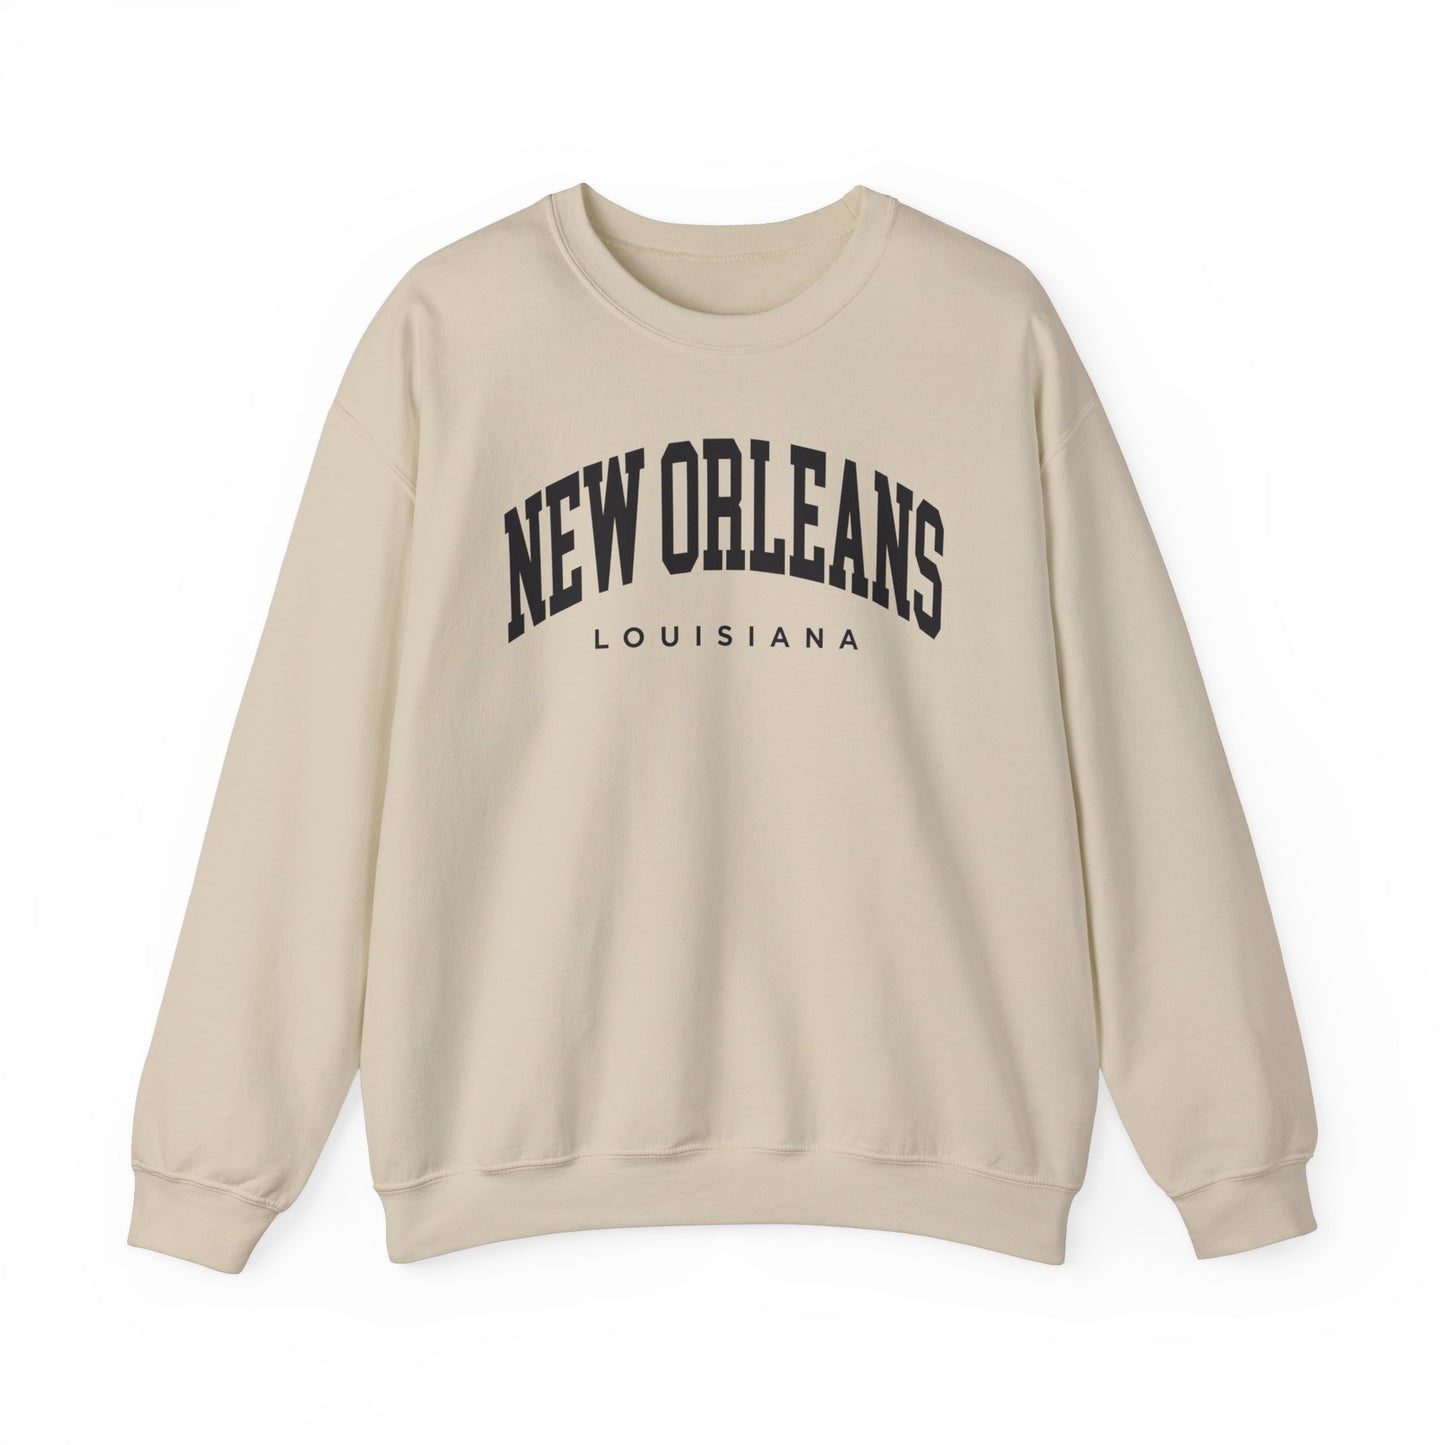 New Orleans Louisiana Sweatshirt